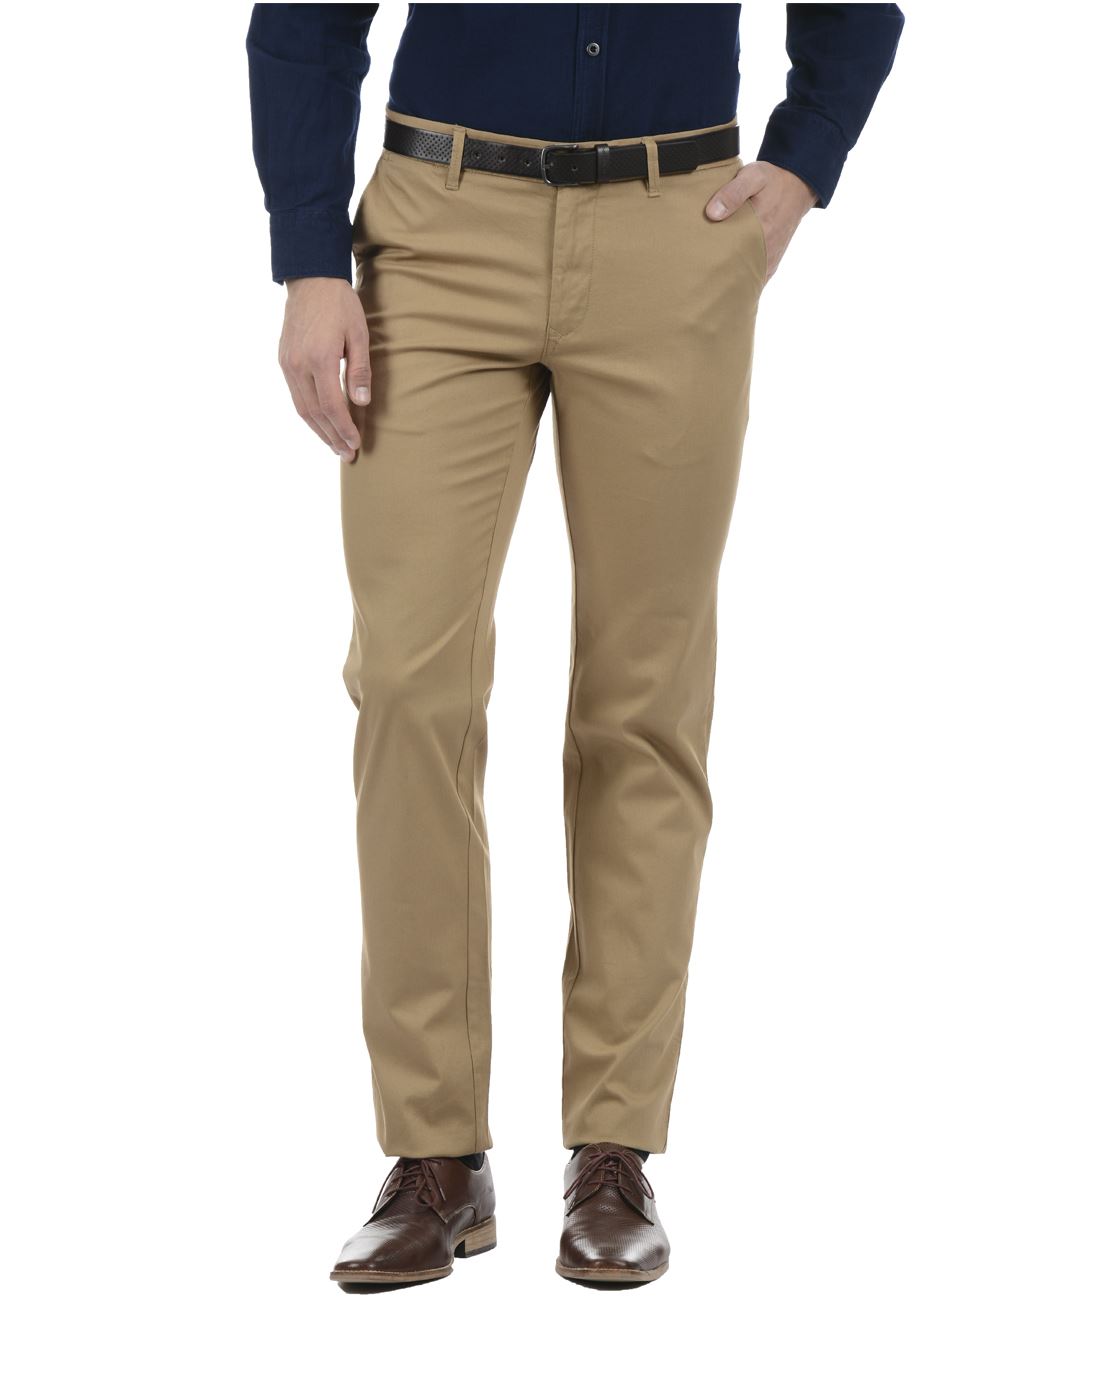 Buy Men Urban Fit Cotton Stretch Trouser Online | Indian Terrain